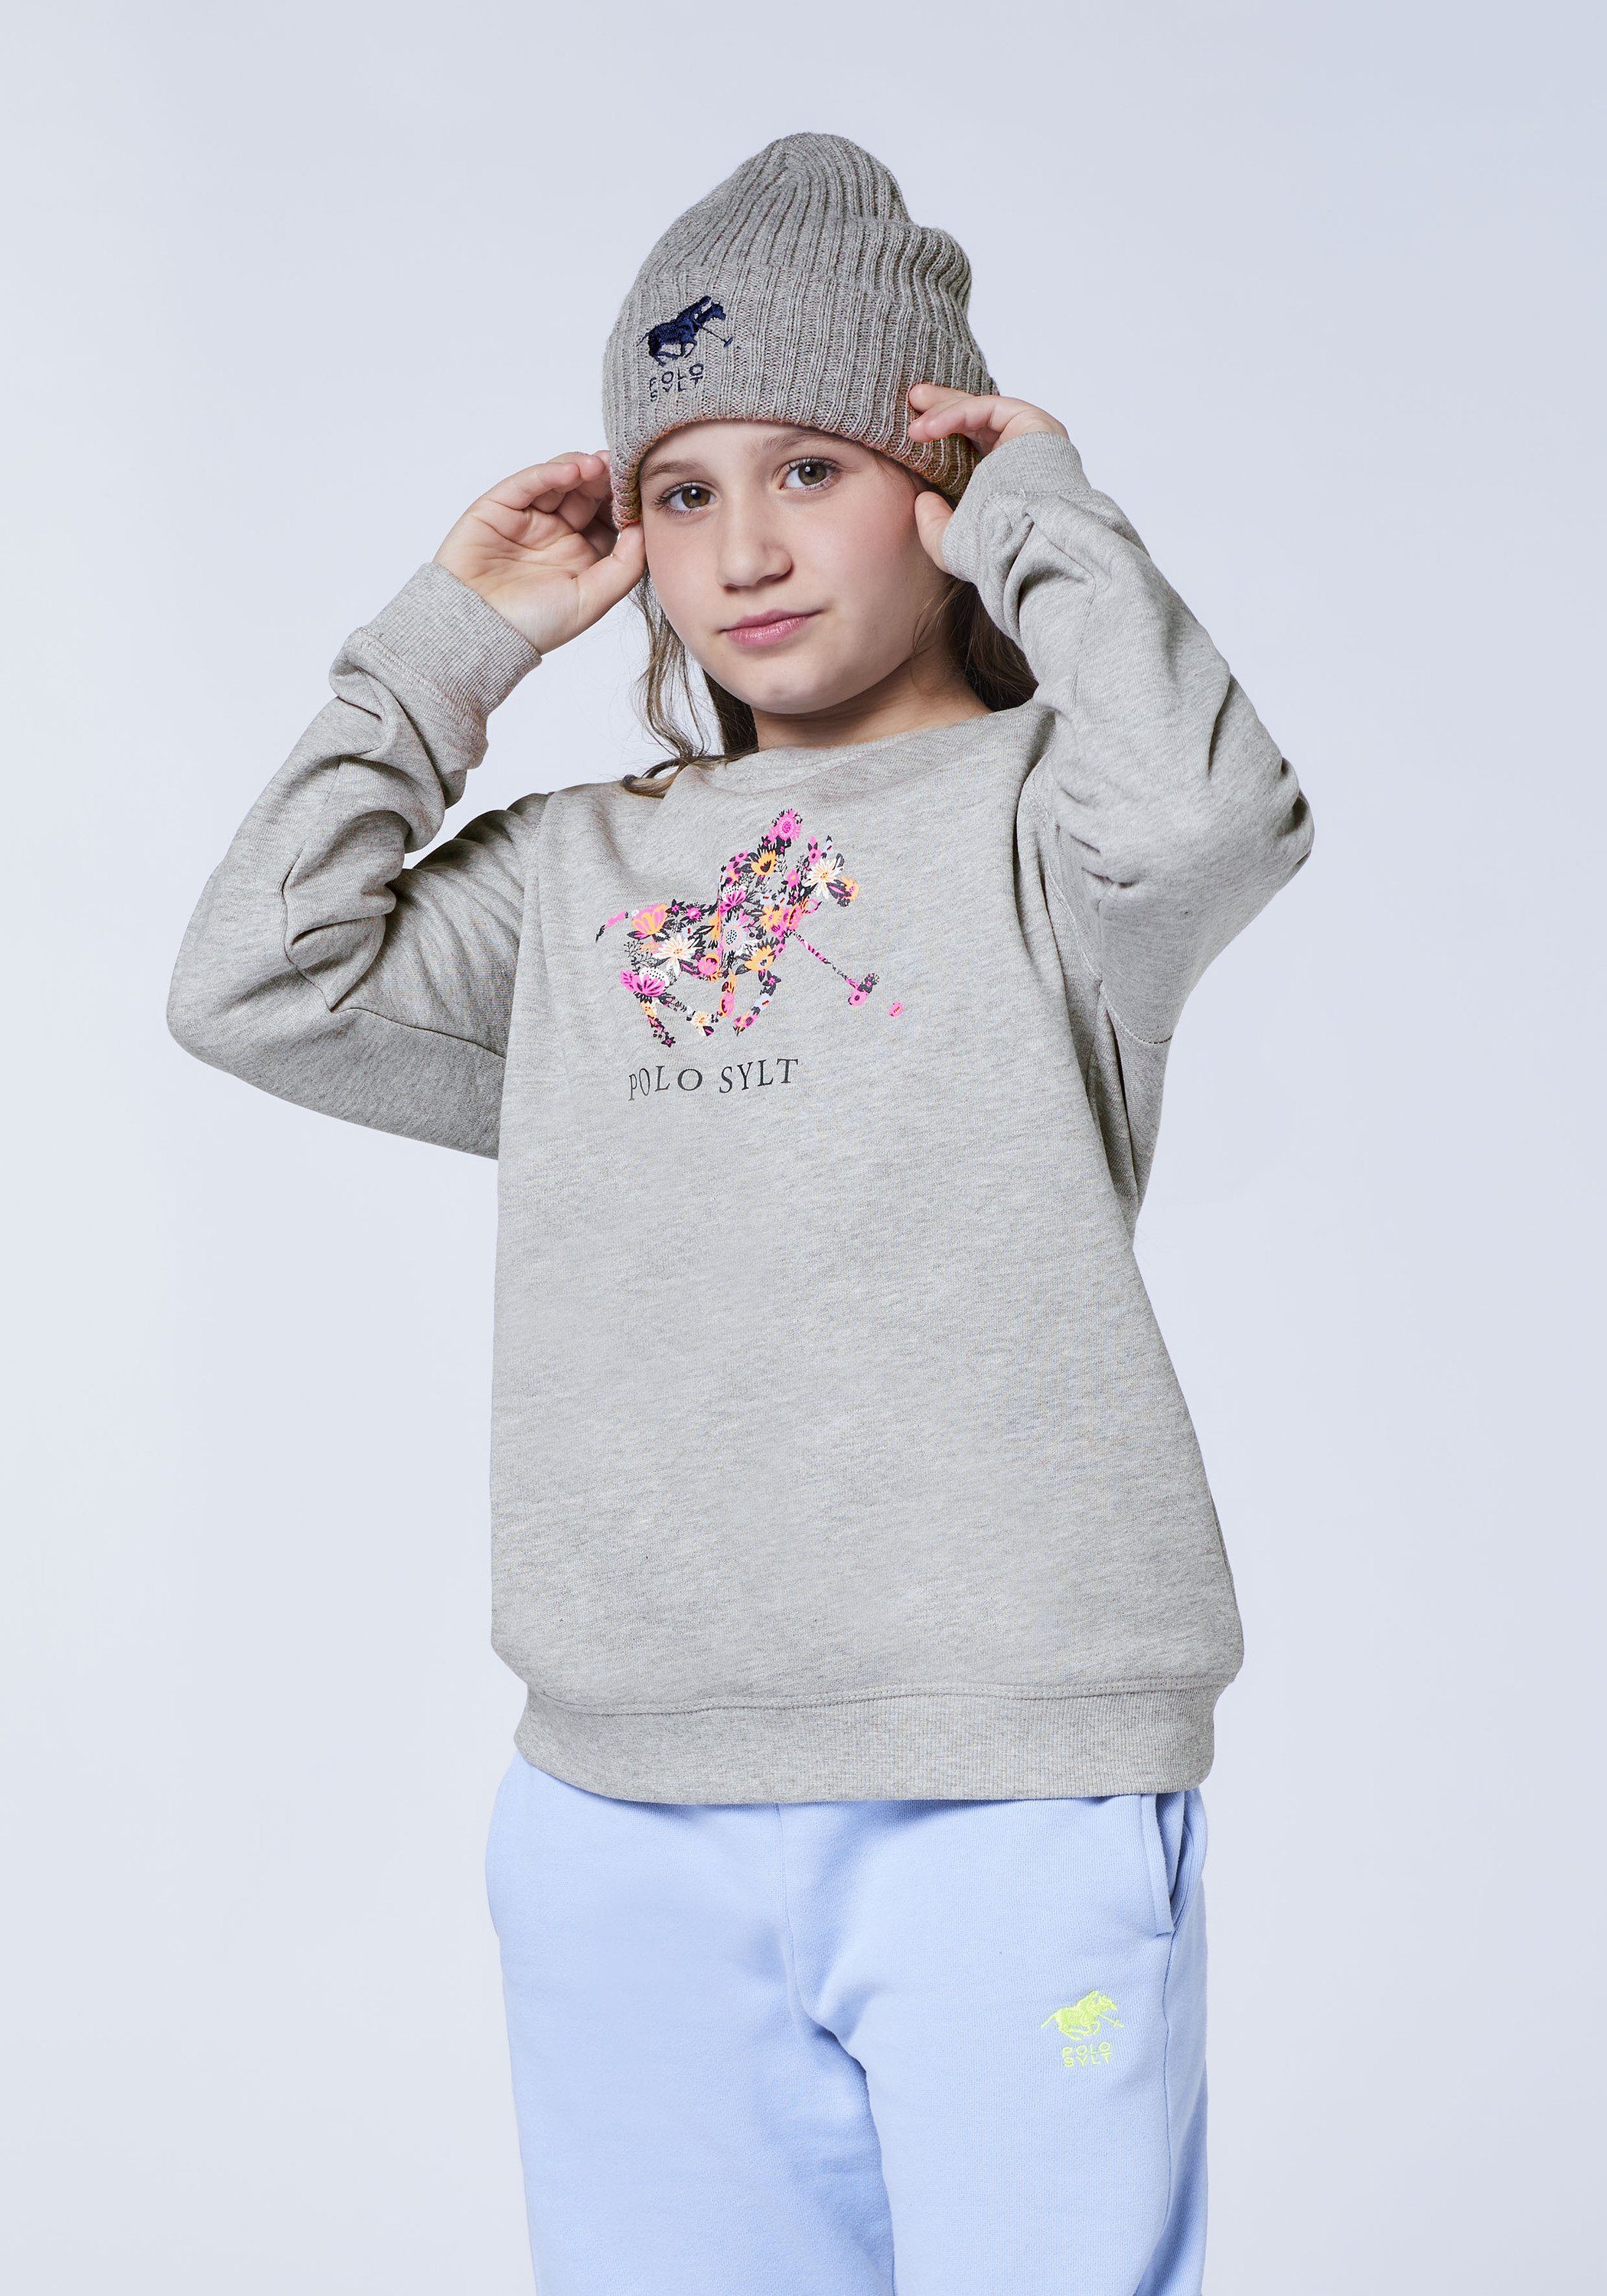 Polo Sylt Neutral Melange mit 17-4402M Gray Logodesign floralem Sweatshirt